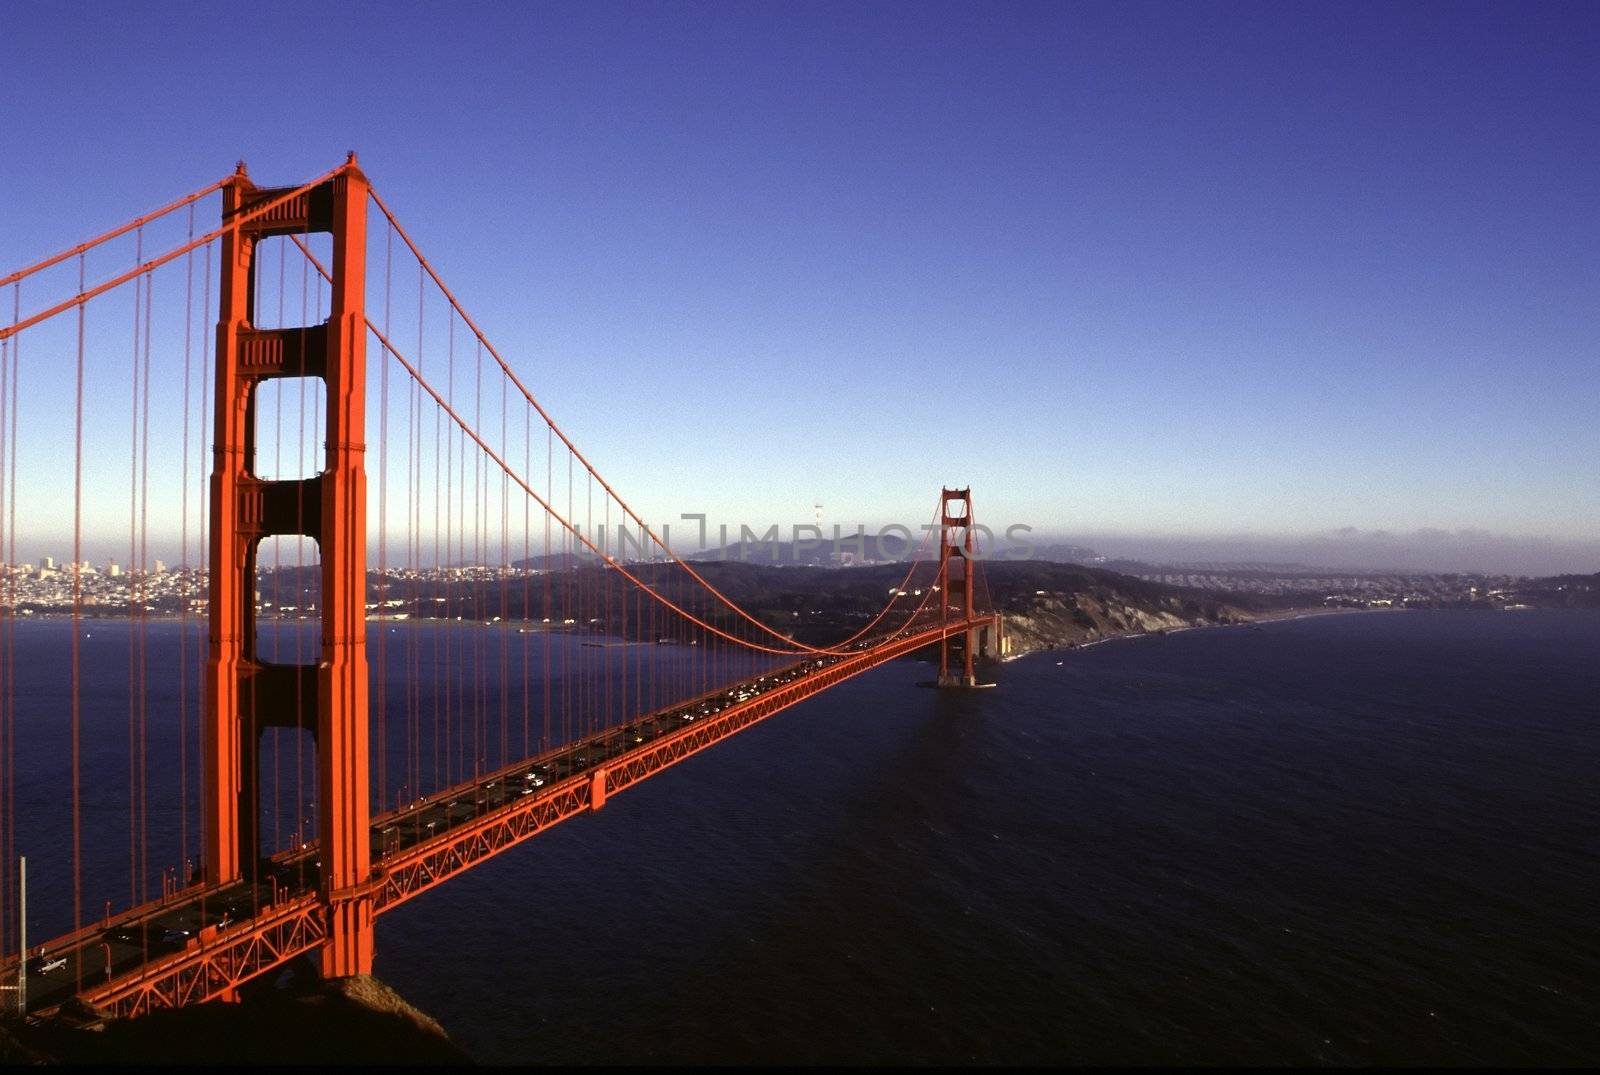 San Francisco landmark - Golden Gate bridge